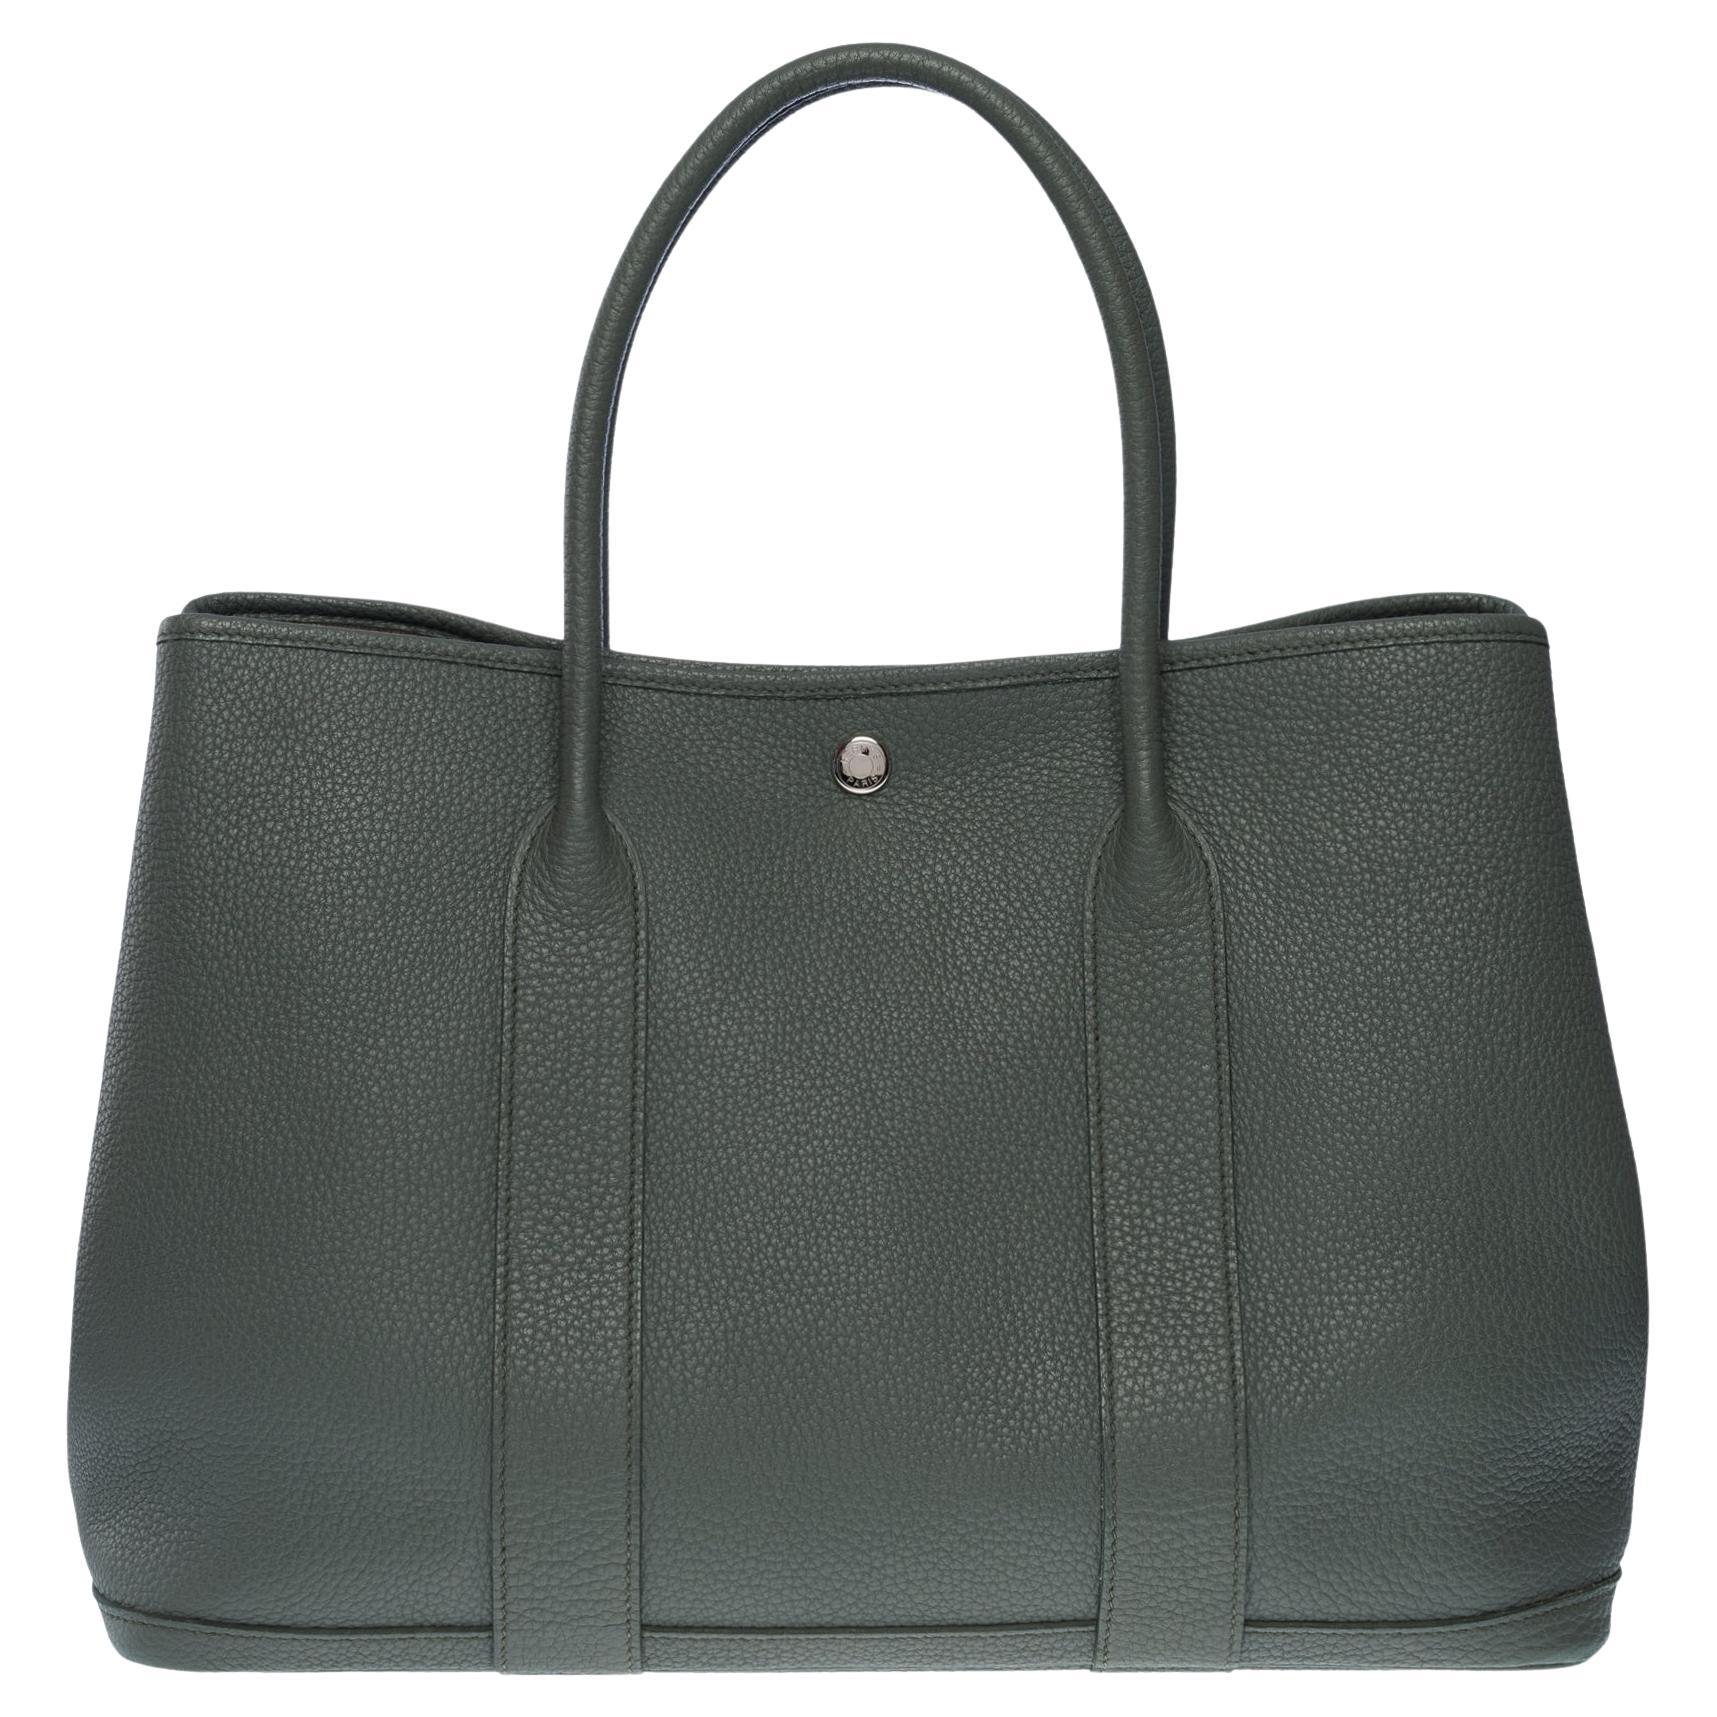 Gorgeous Hermès Garden Party 36 Tote bag in green Almond Negonda leather, SHW